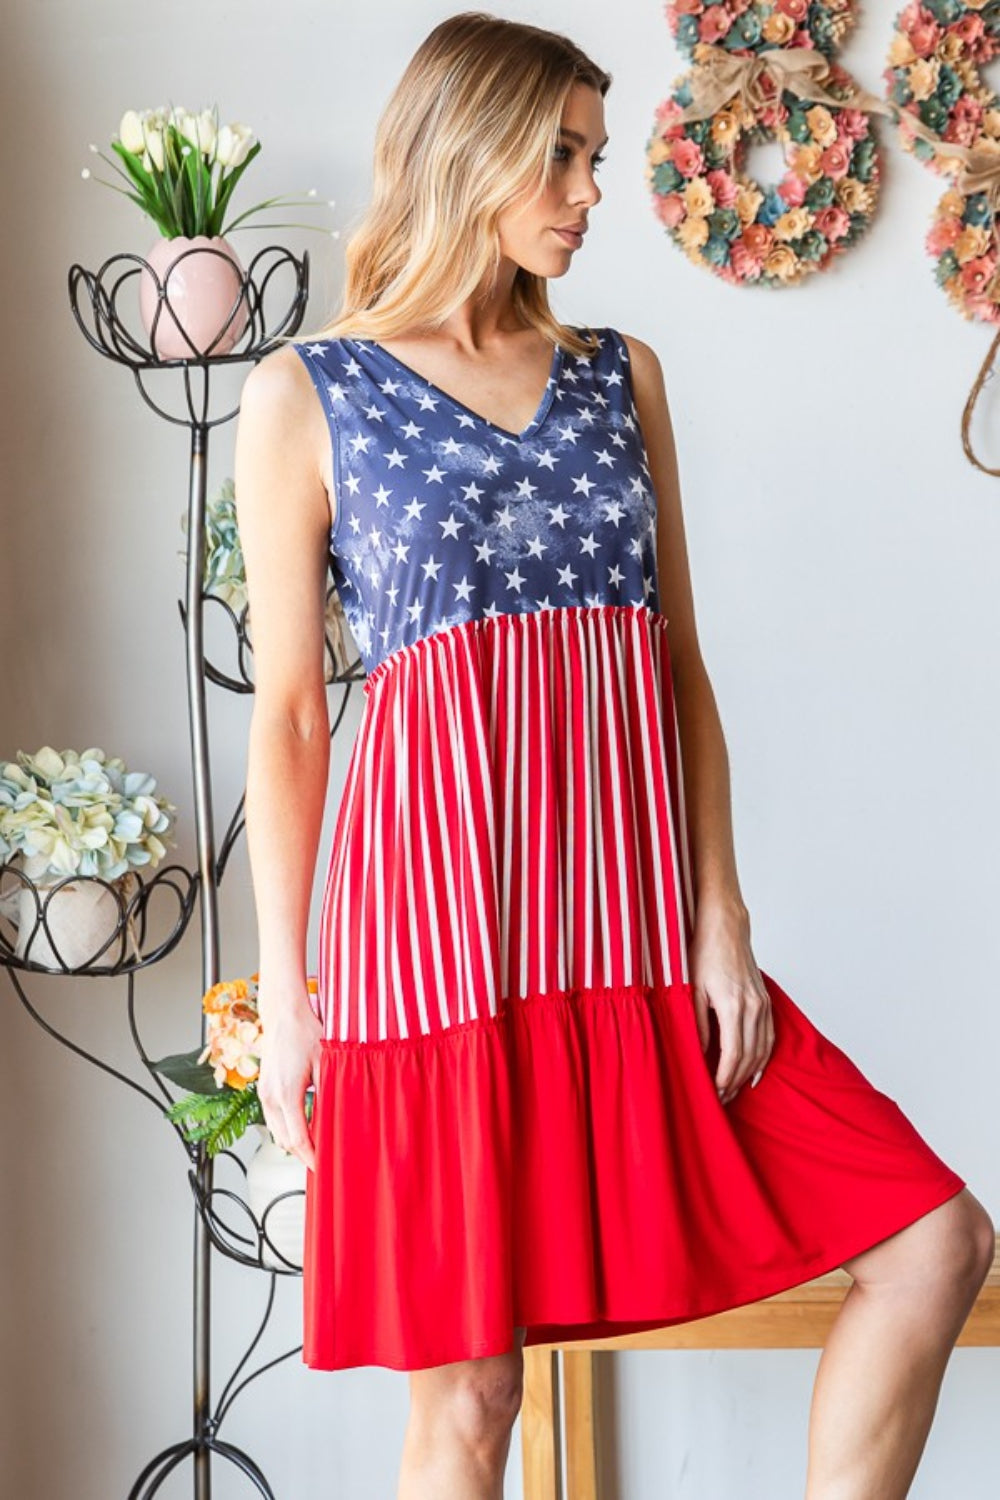 Heimish Full Size US Flag Theme Dress